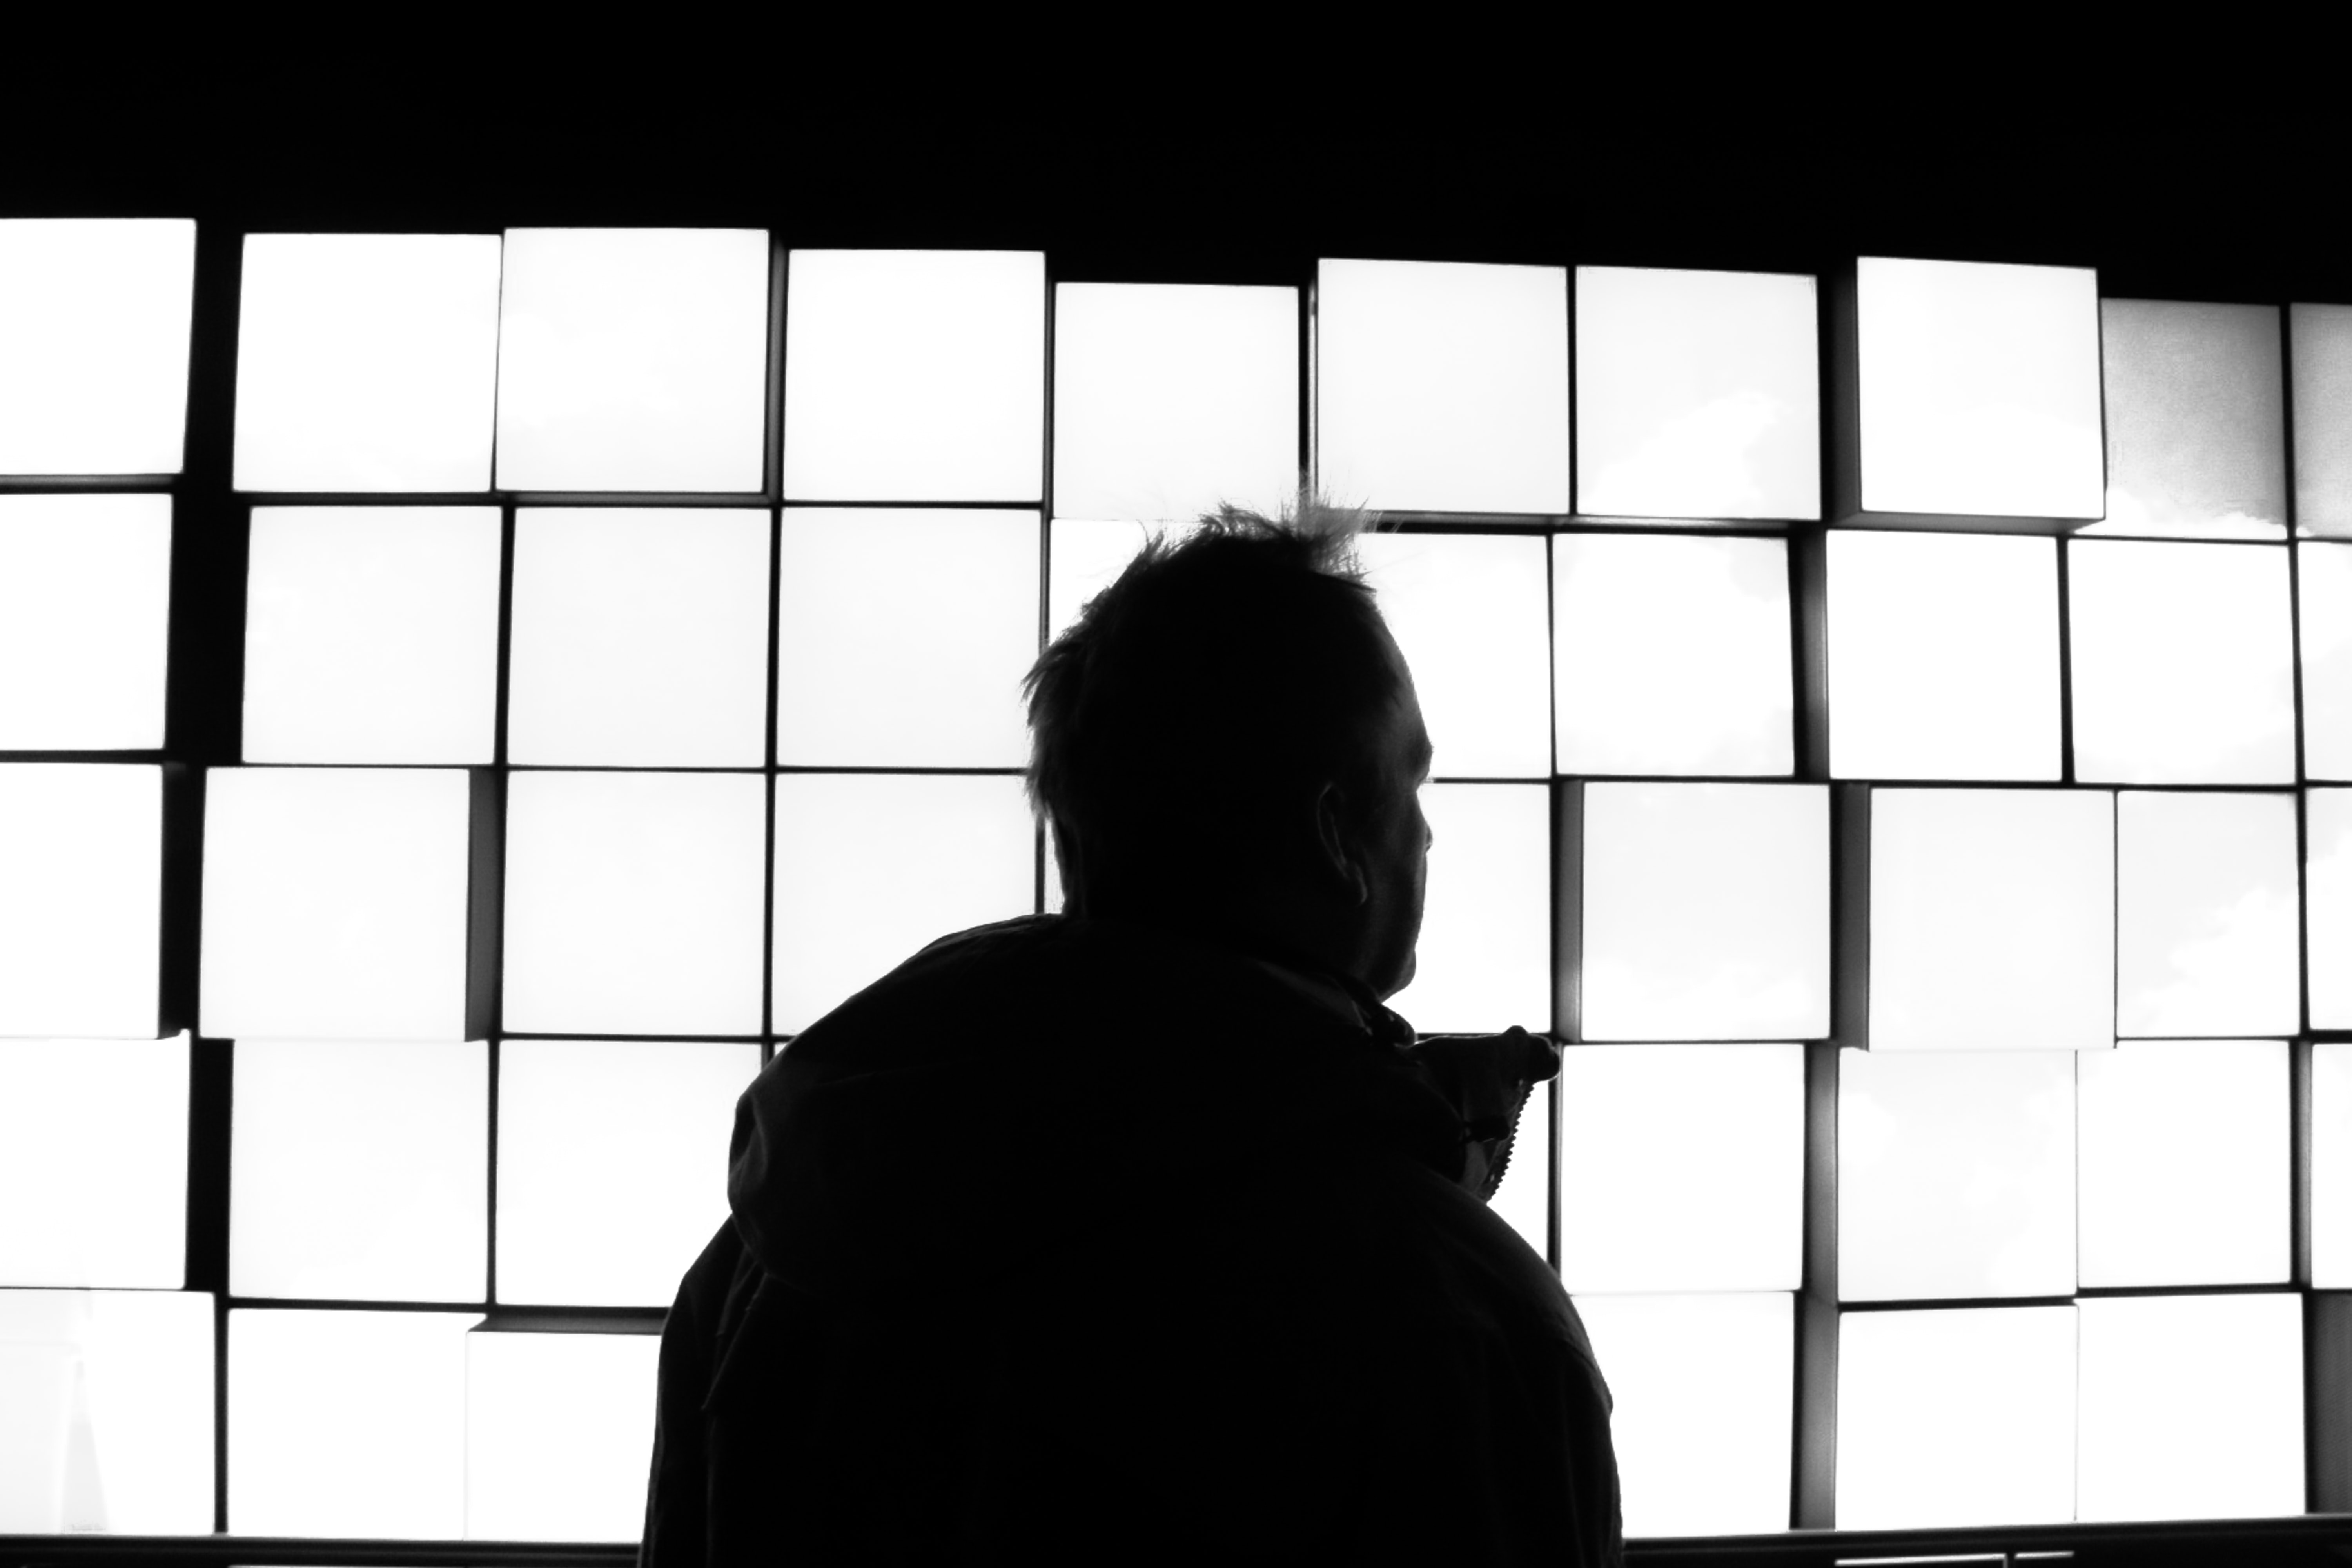 Male silhouette near boxes; image by Sebastiaan Stam, via Unsplash.com.